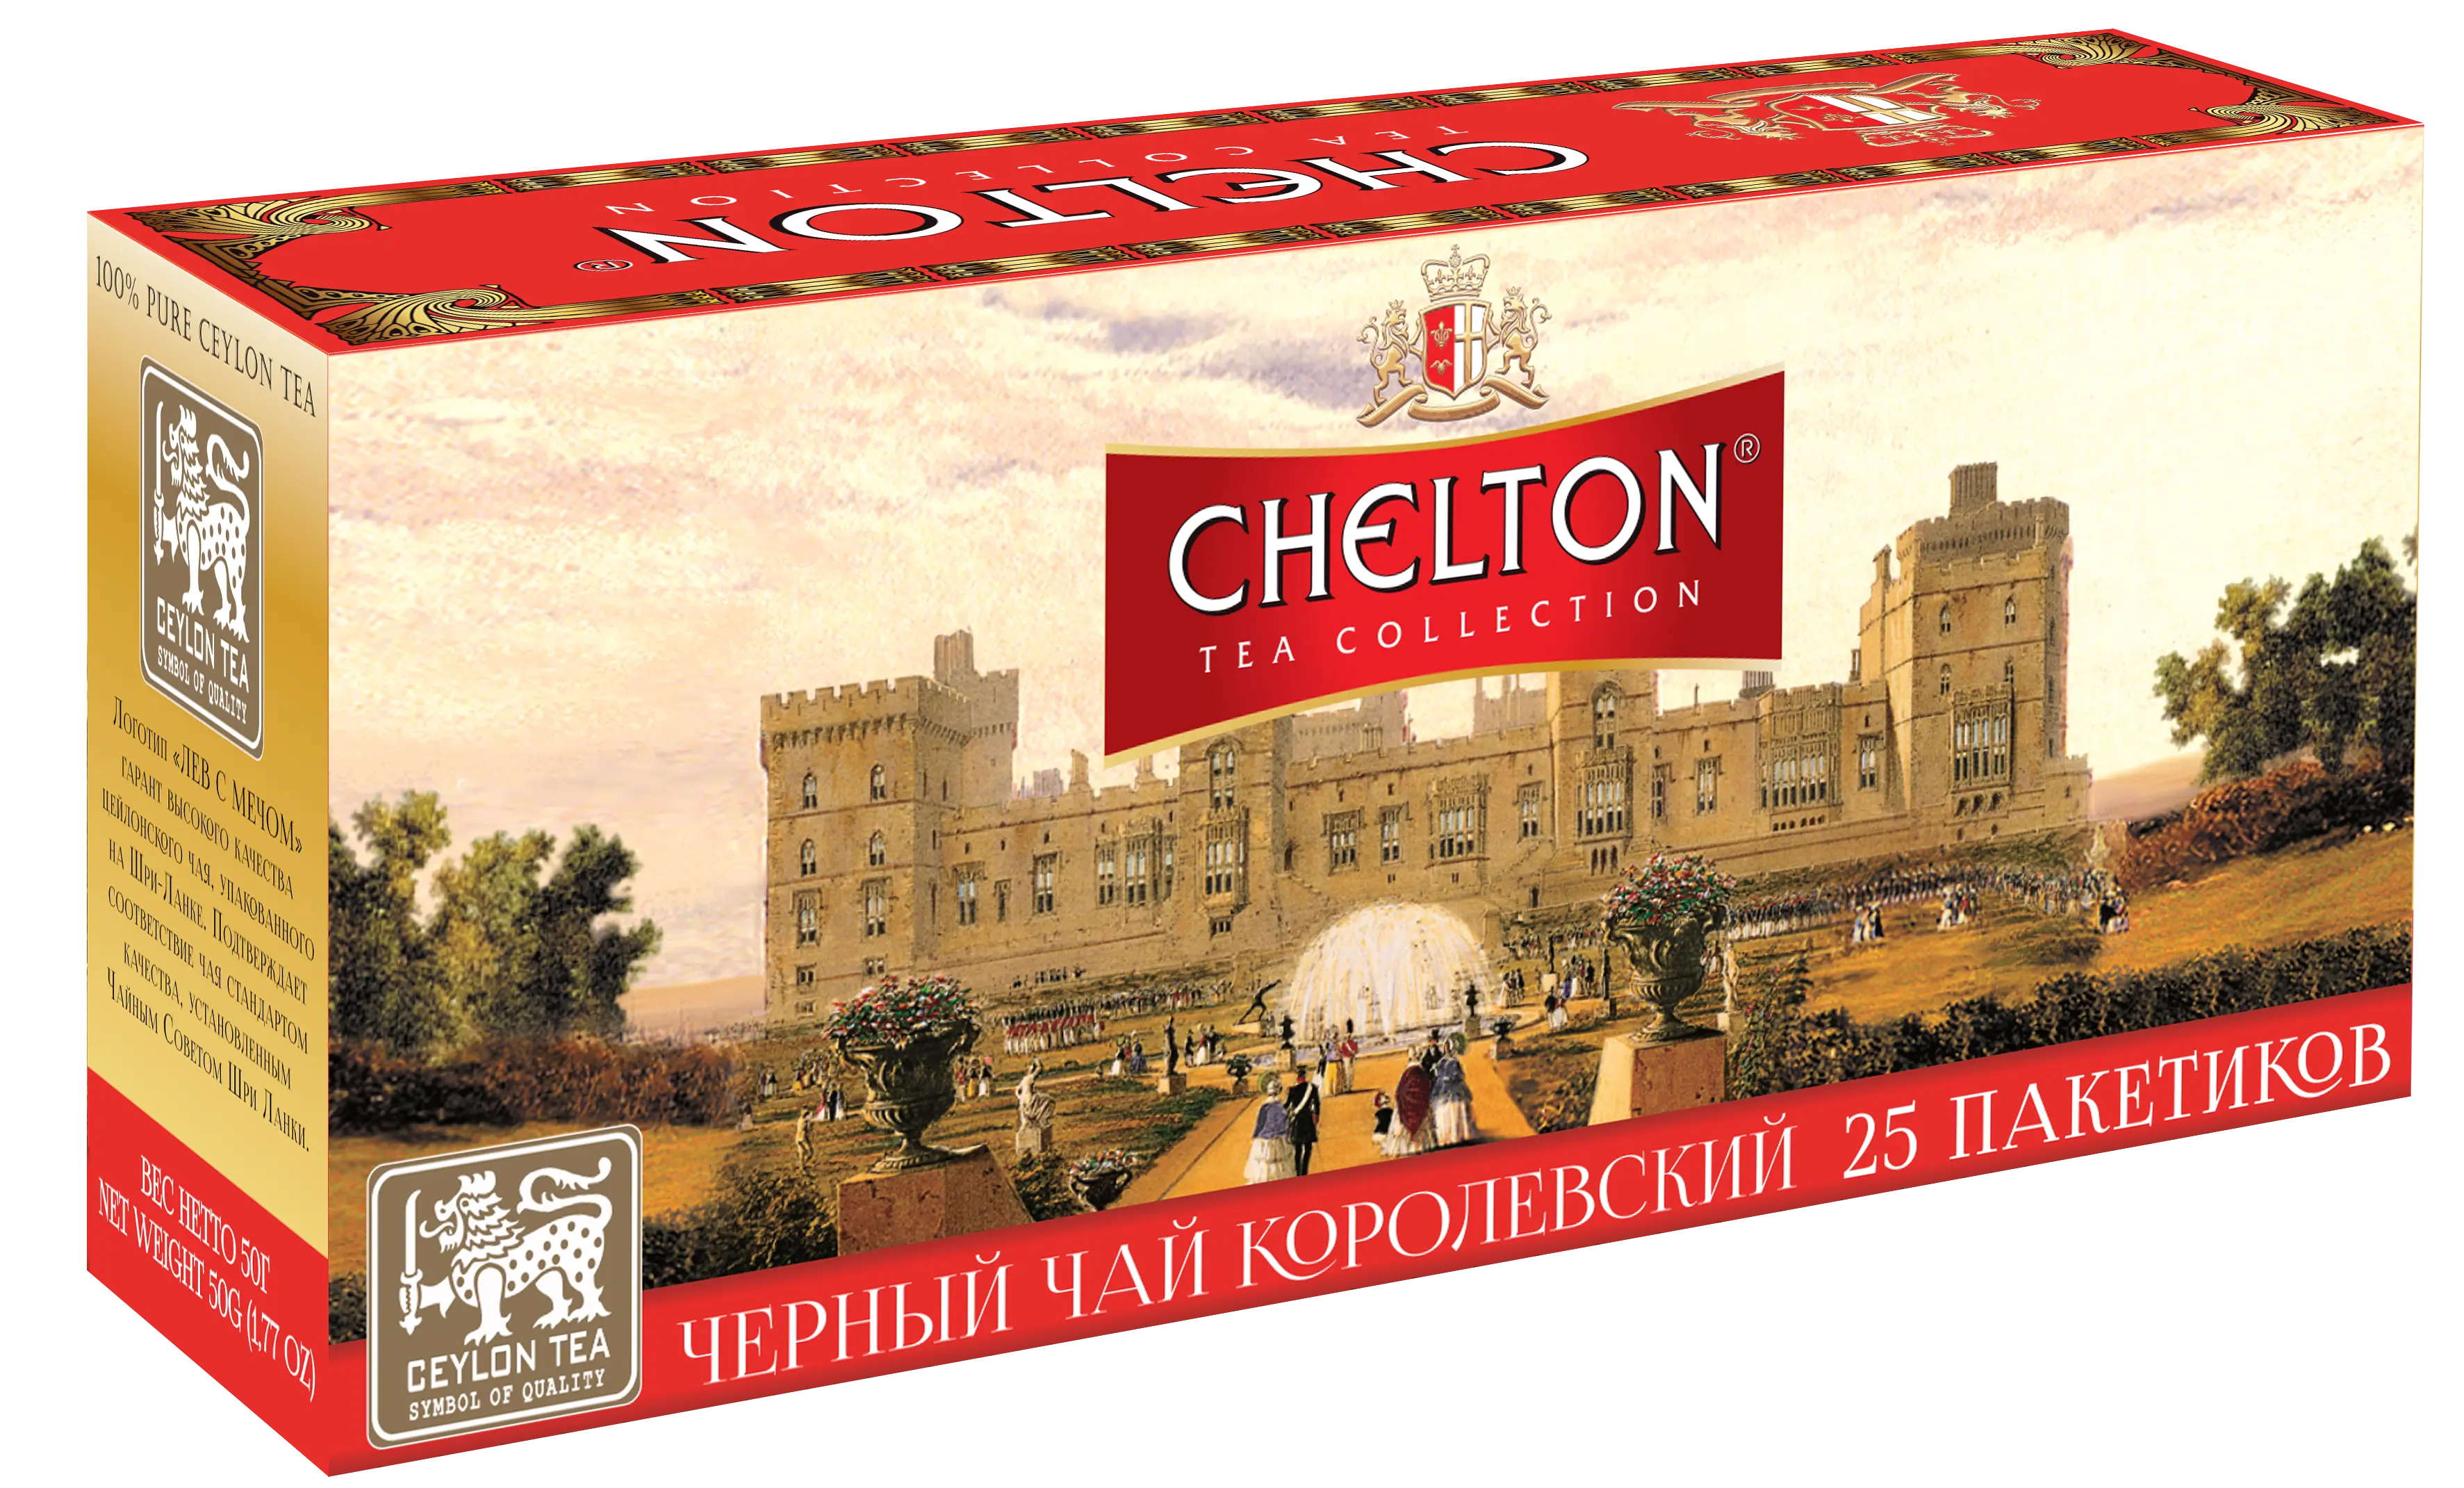 Chelton ex.25 Royal